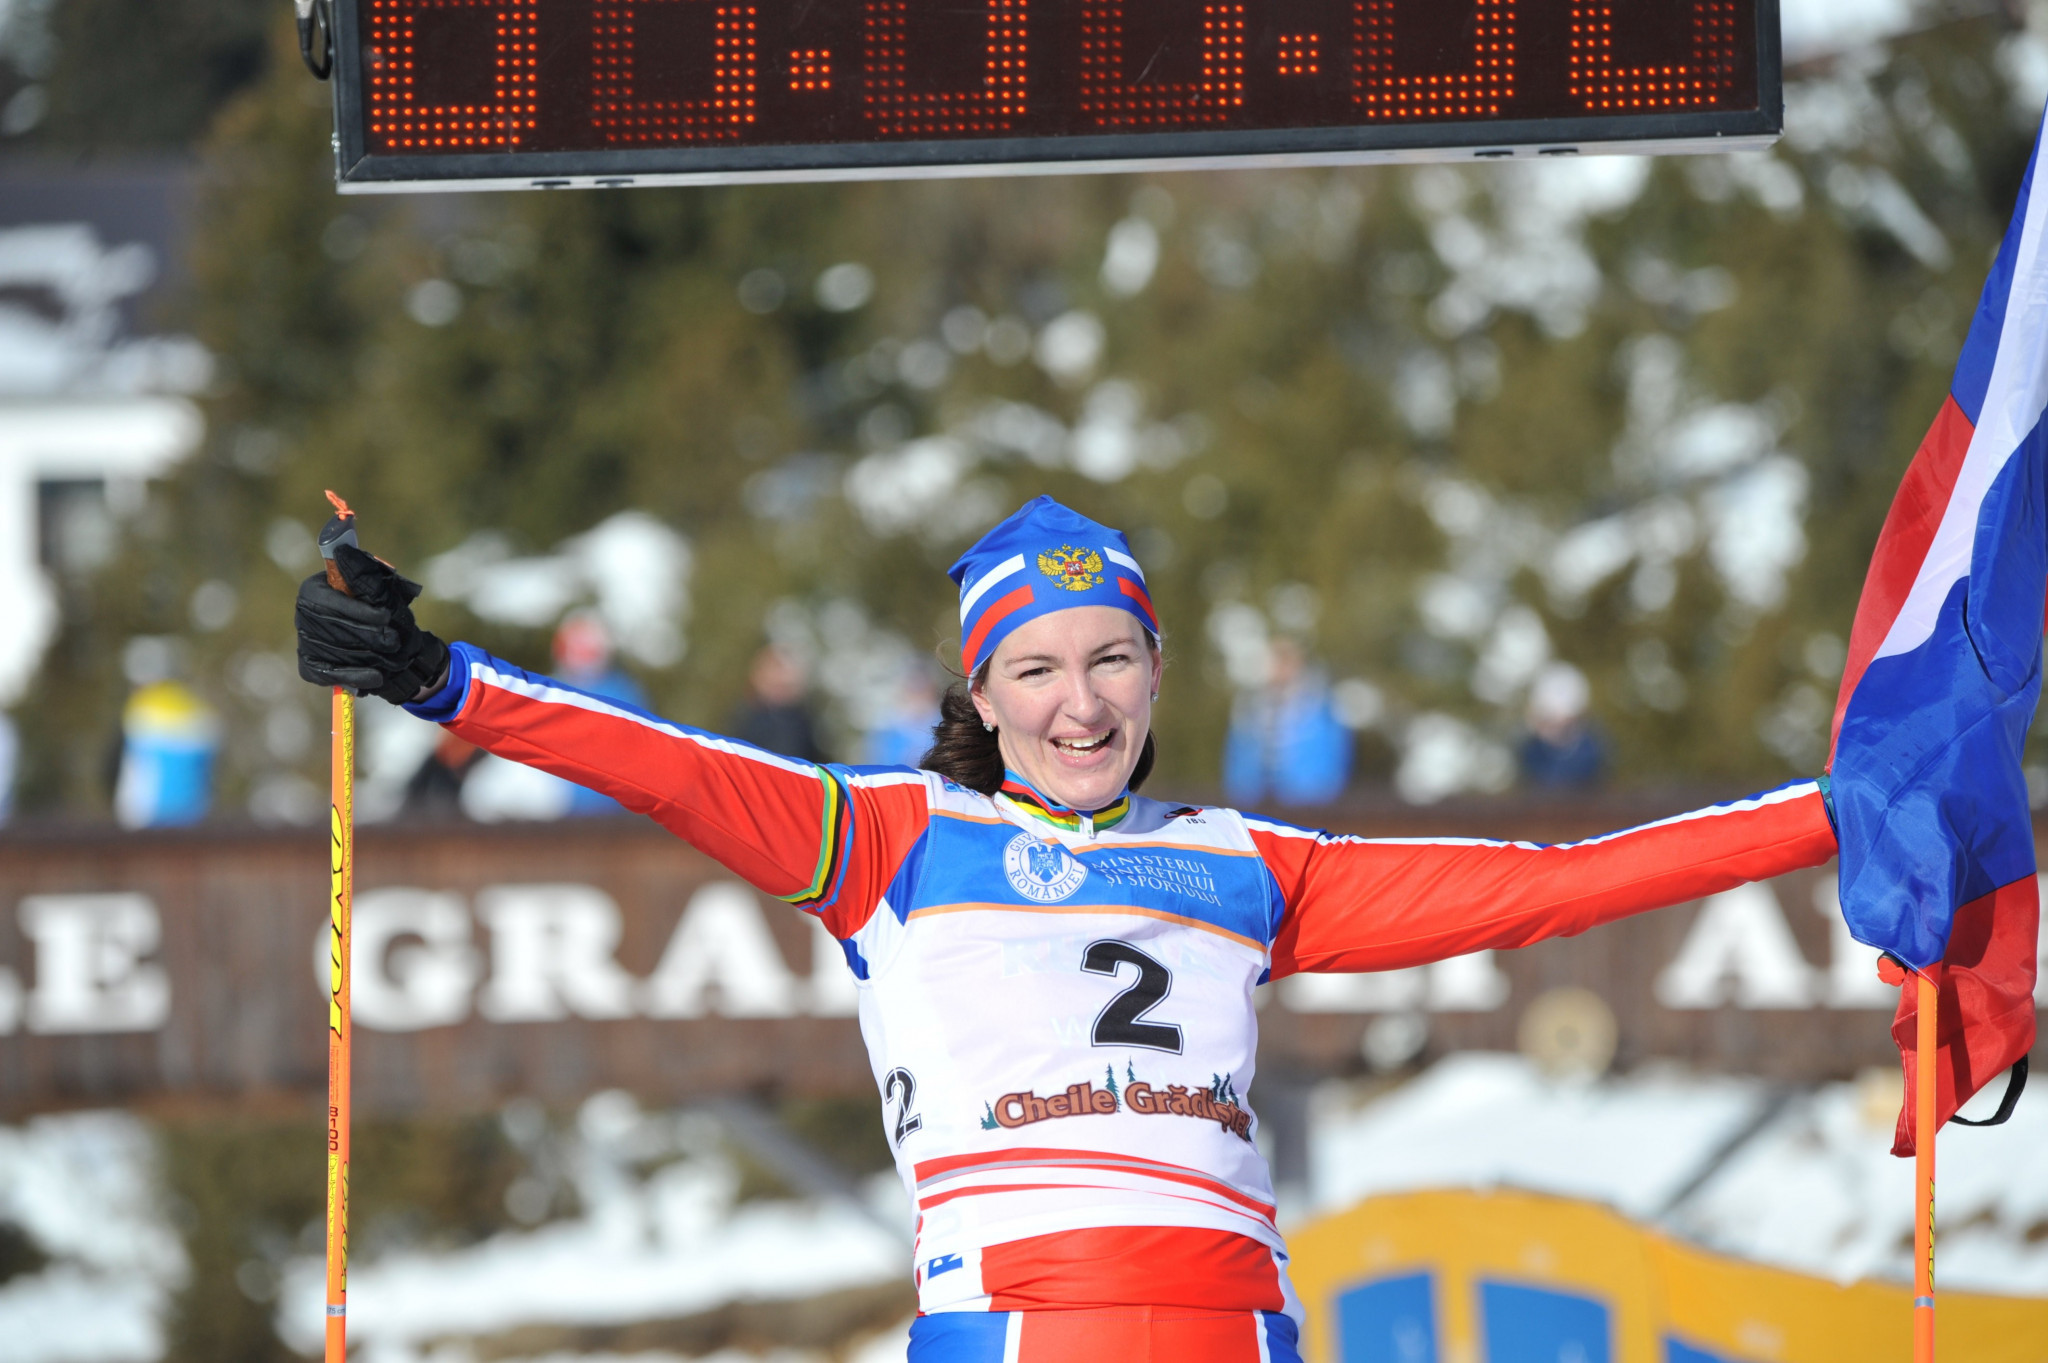 Russians put bite on rivals in Transylvania to win Winter Triathlon World Championships titles